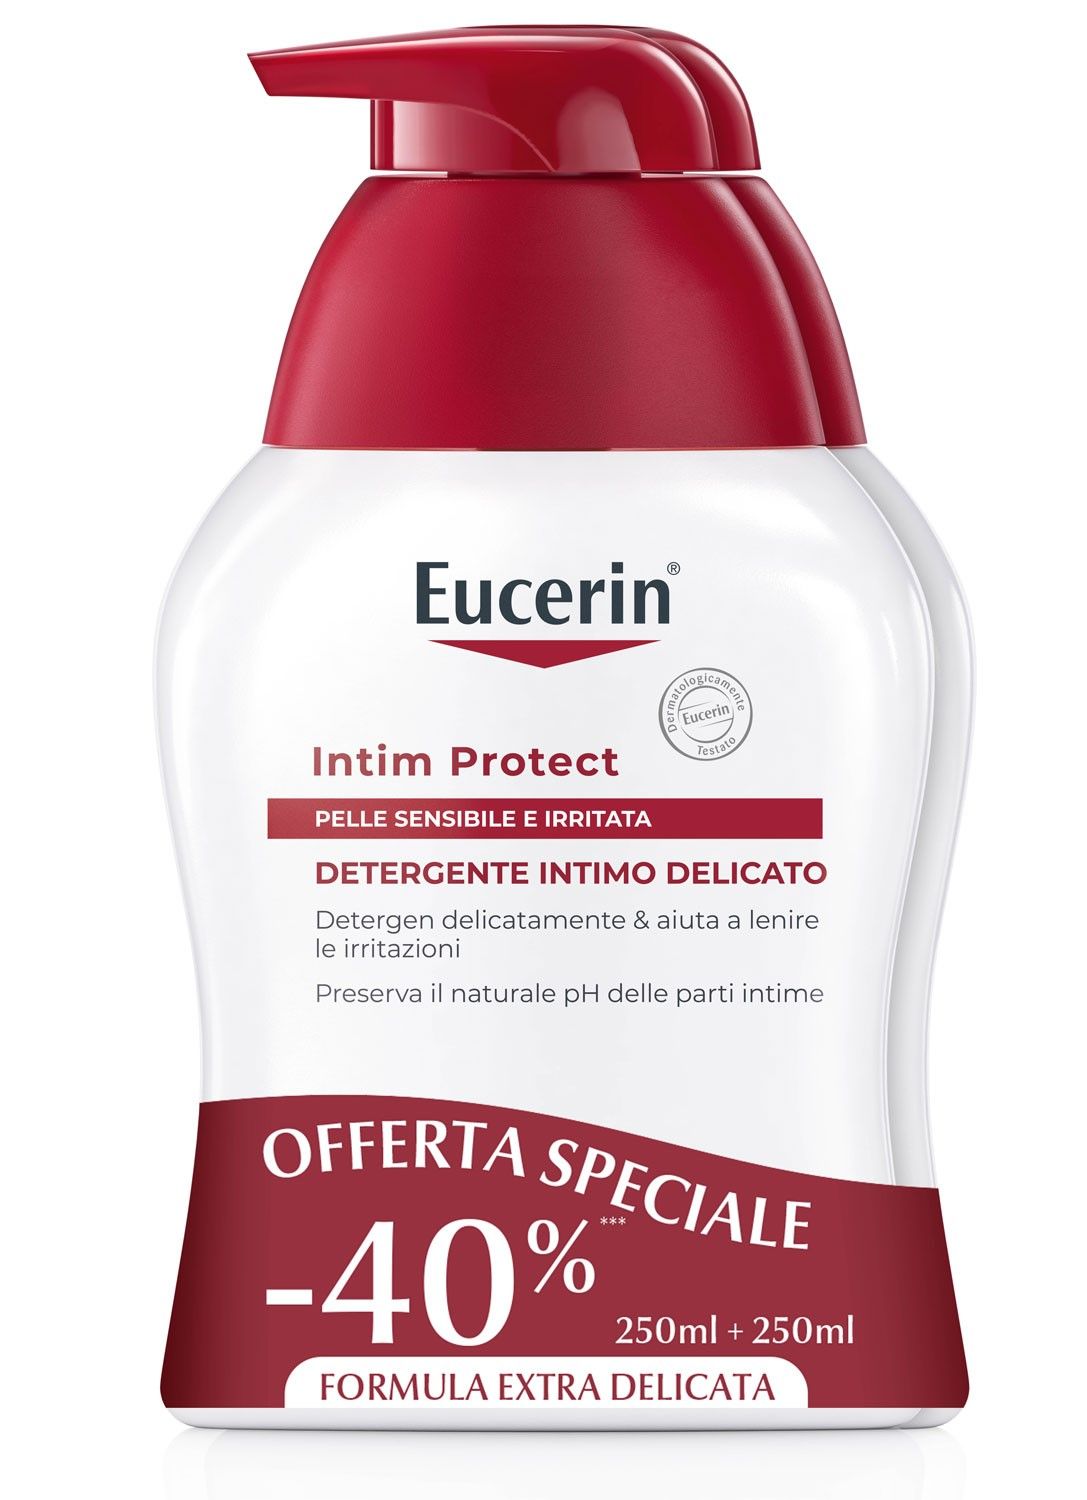 Eucerin Intim Protect Detergente Intimo Delicato 2x250ml